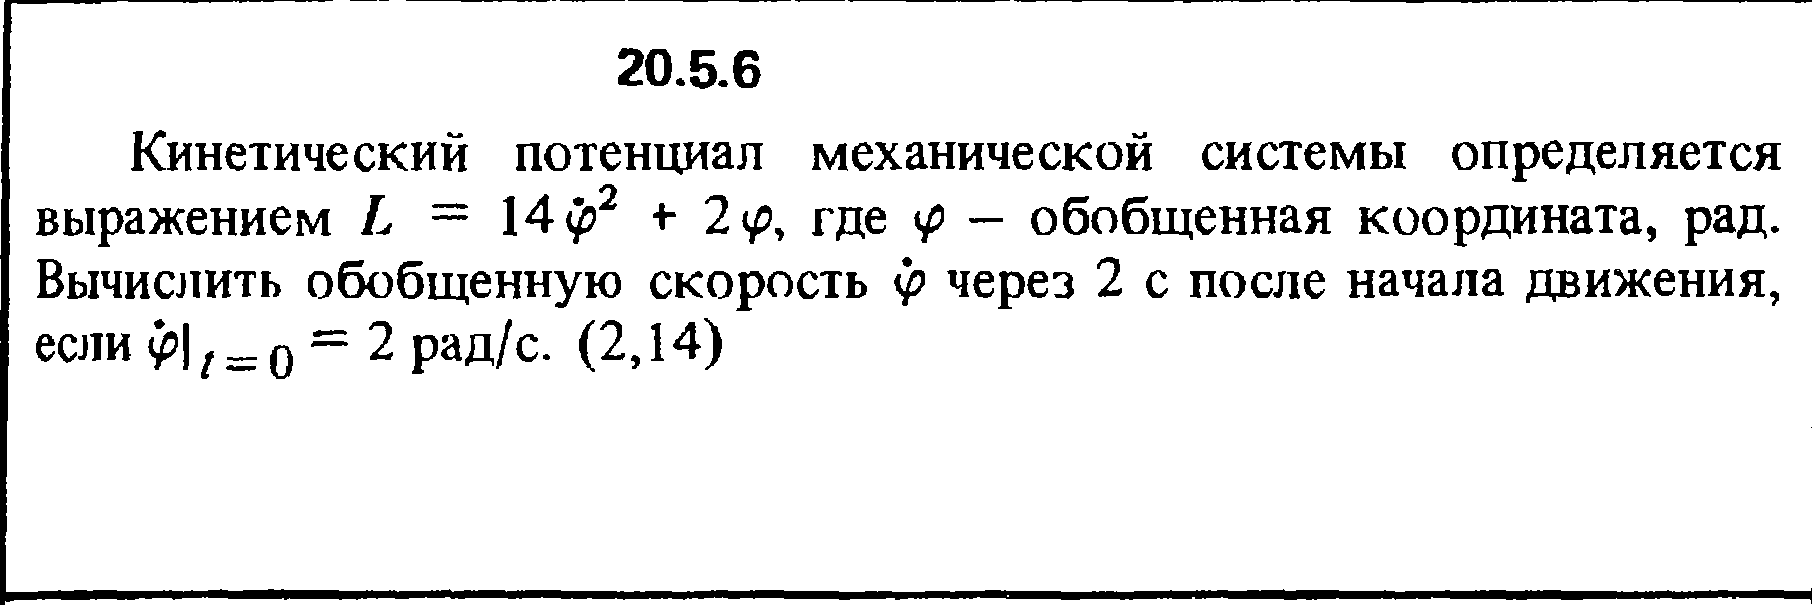 Решение 20.5.6 из сборника (решебника) Кепе О.Е. 1989